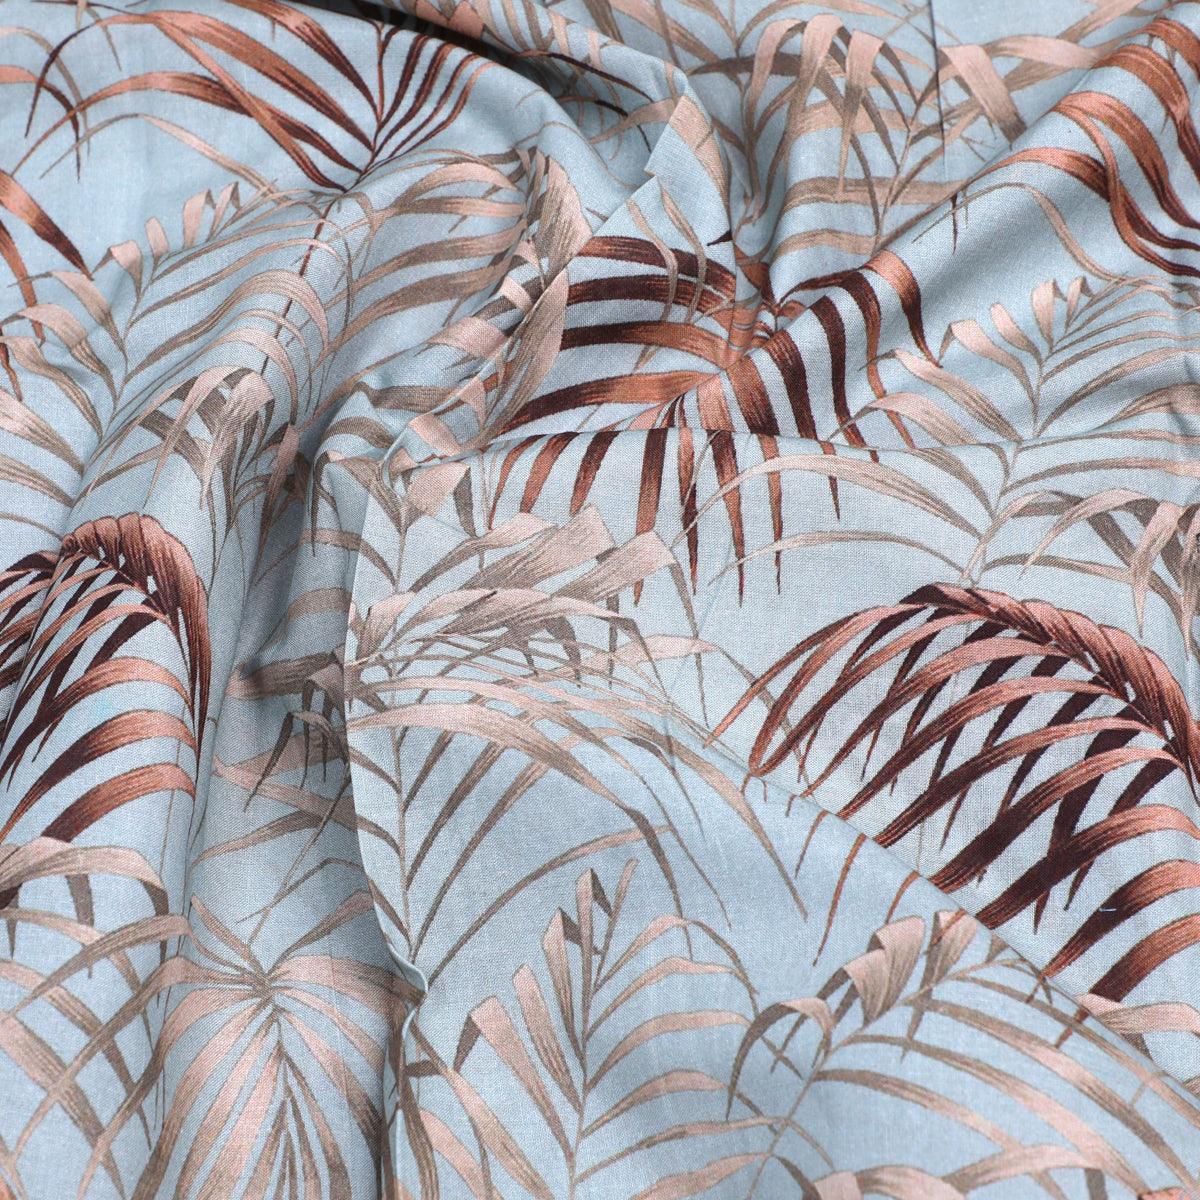 Tropical Garden Leaves Digital Printed Fabric - Pure Cotton - FAB VOGUE Studio®